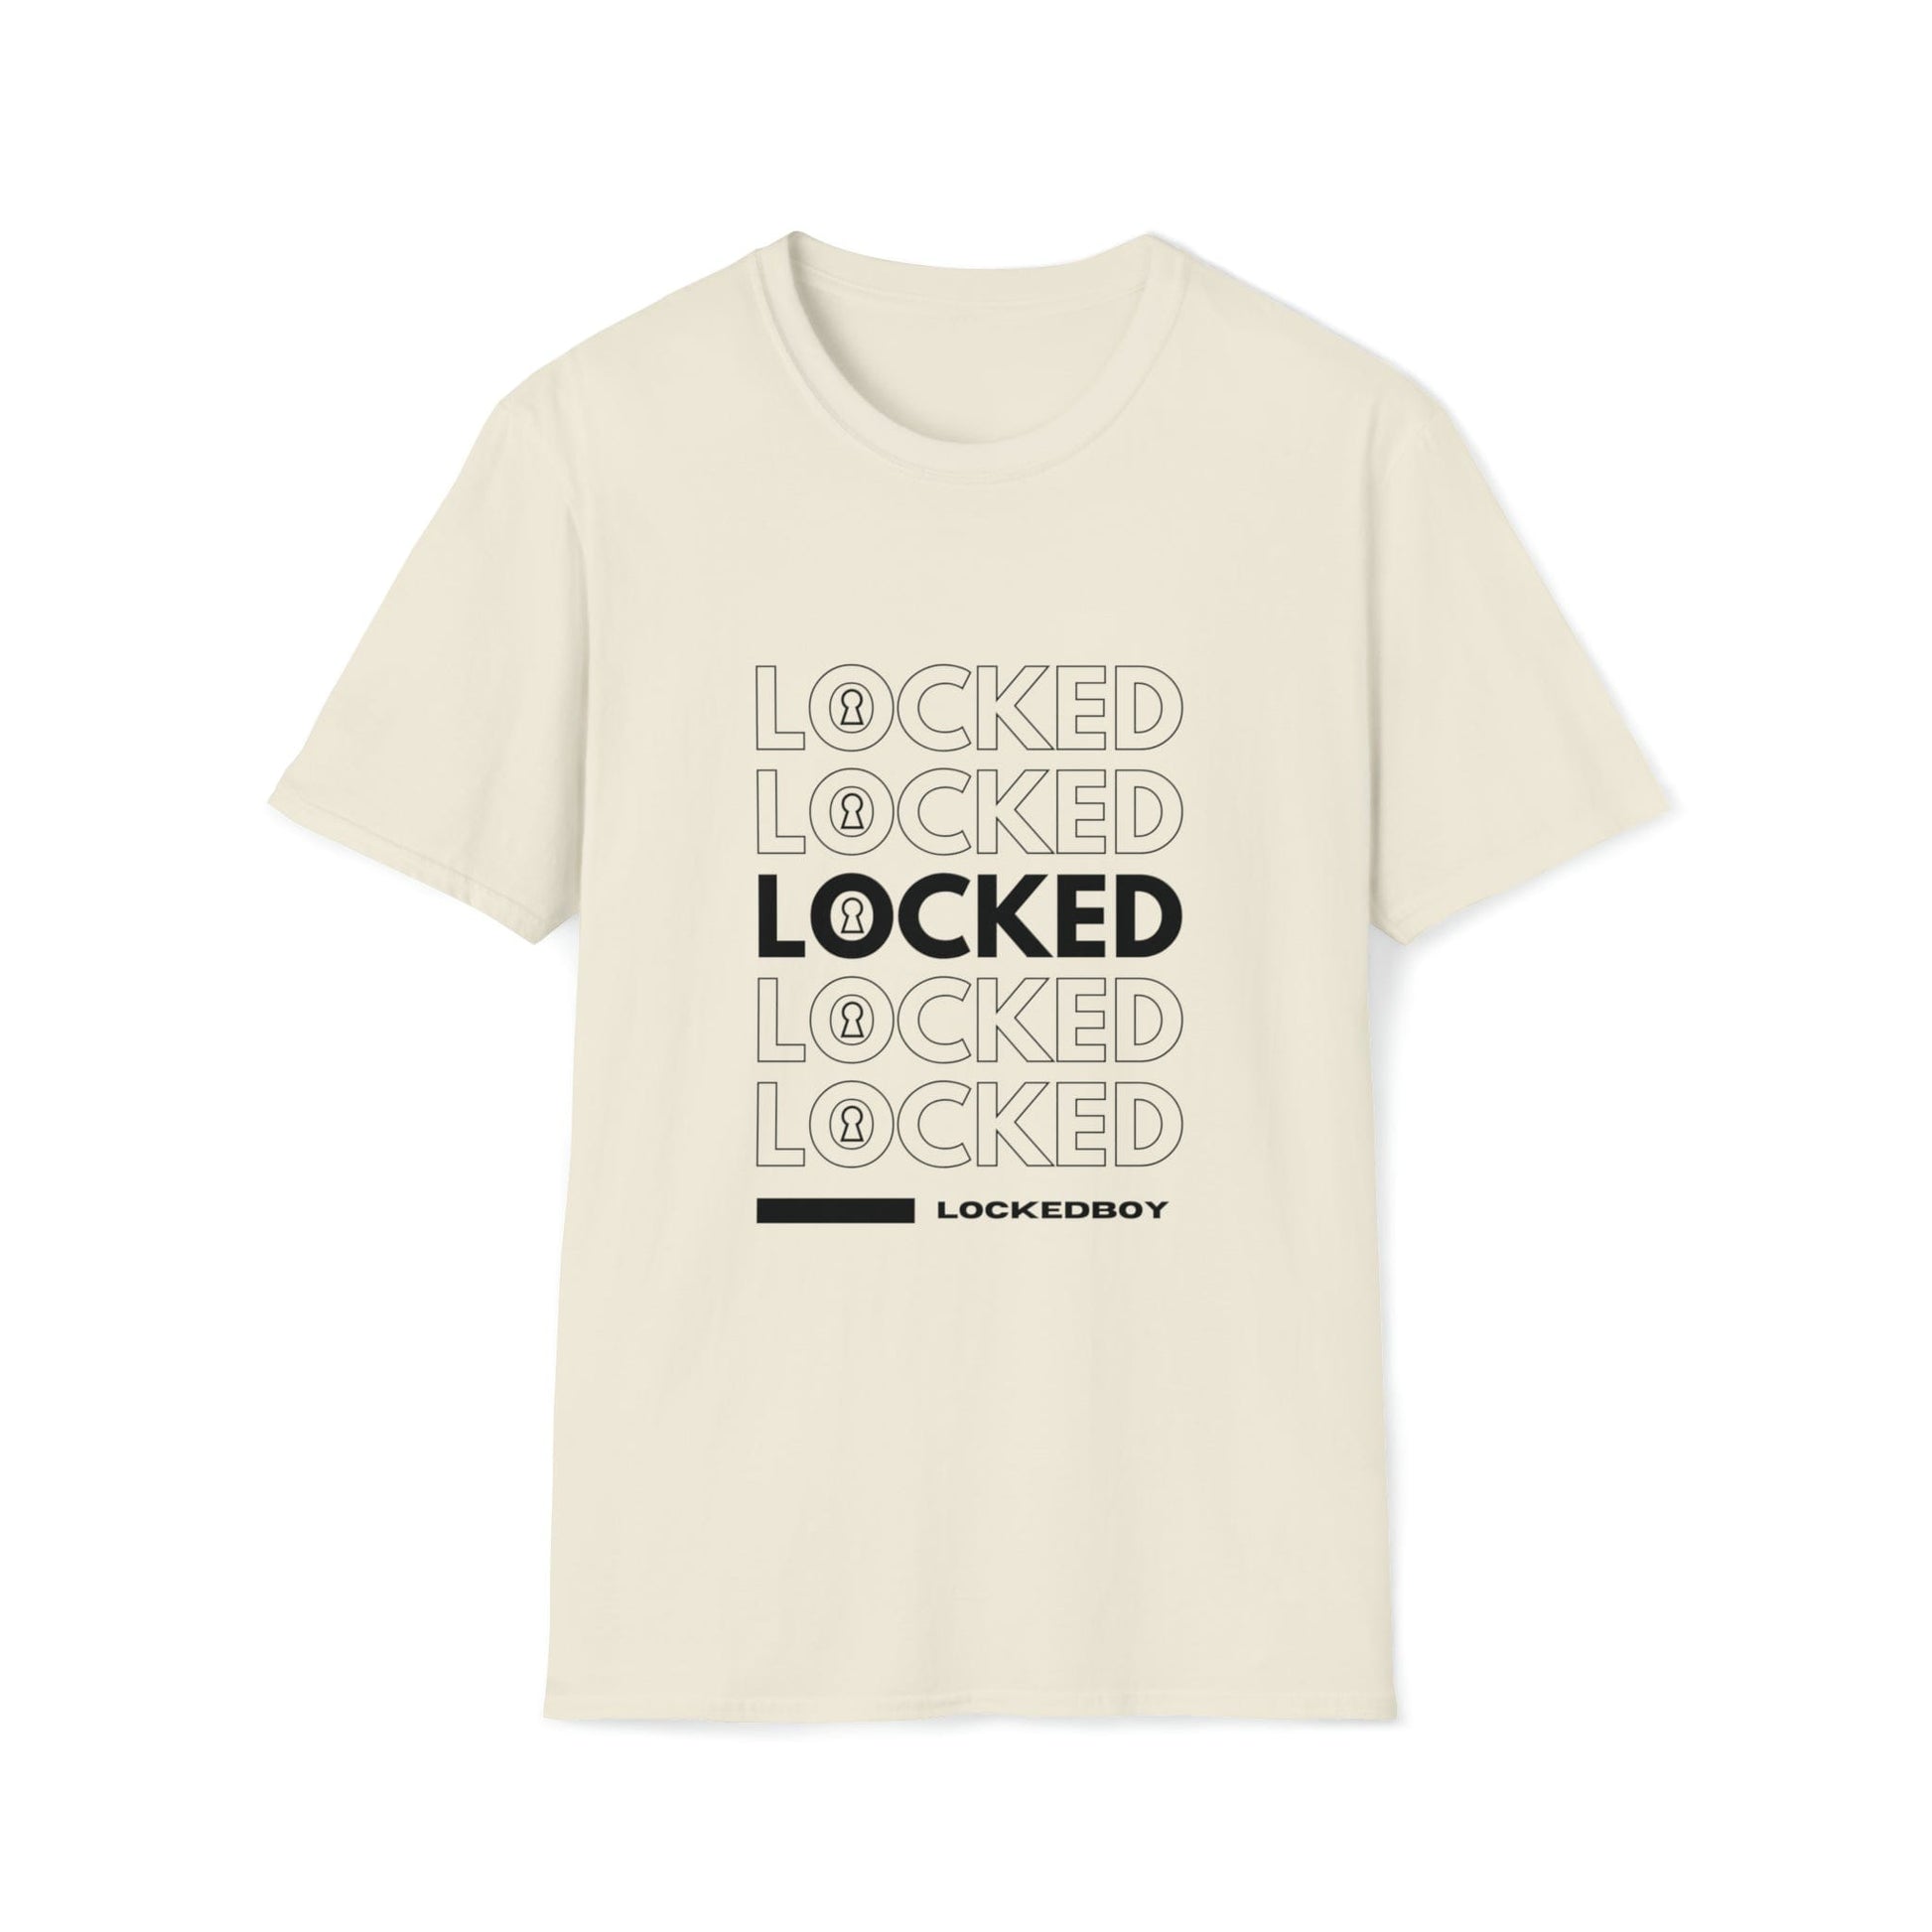 T-Shirt Natural / S LOCKED Inspo (black text) - Chastity Shirts by LockedBoy Athletics LEATHERDADDY BATOR